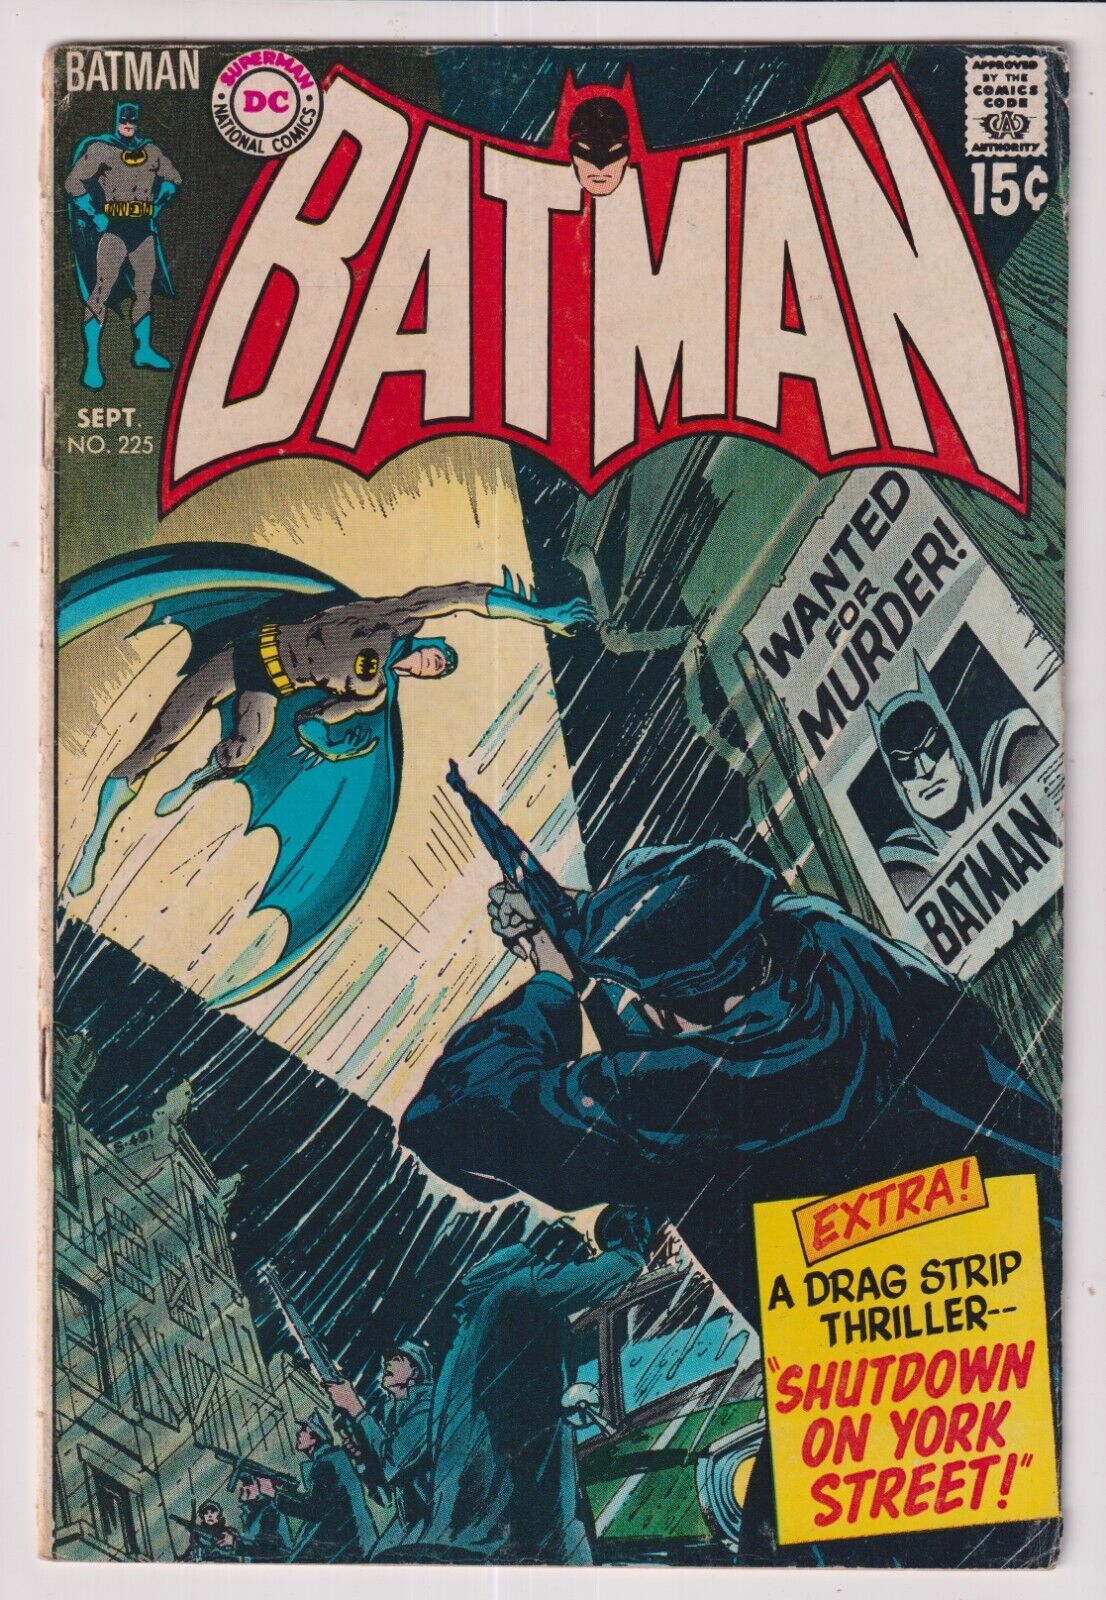 1970 DC COMICS BATMAN #225 IN GD/VG CONDITION 